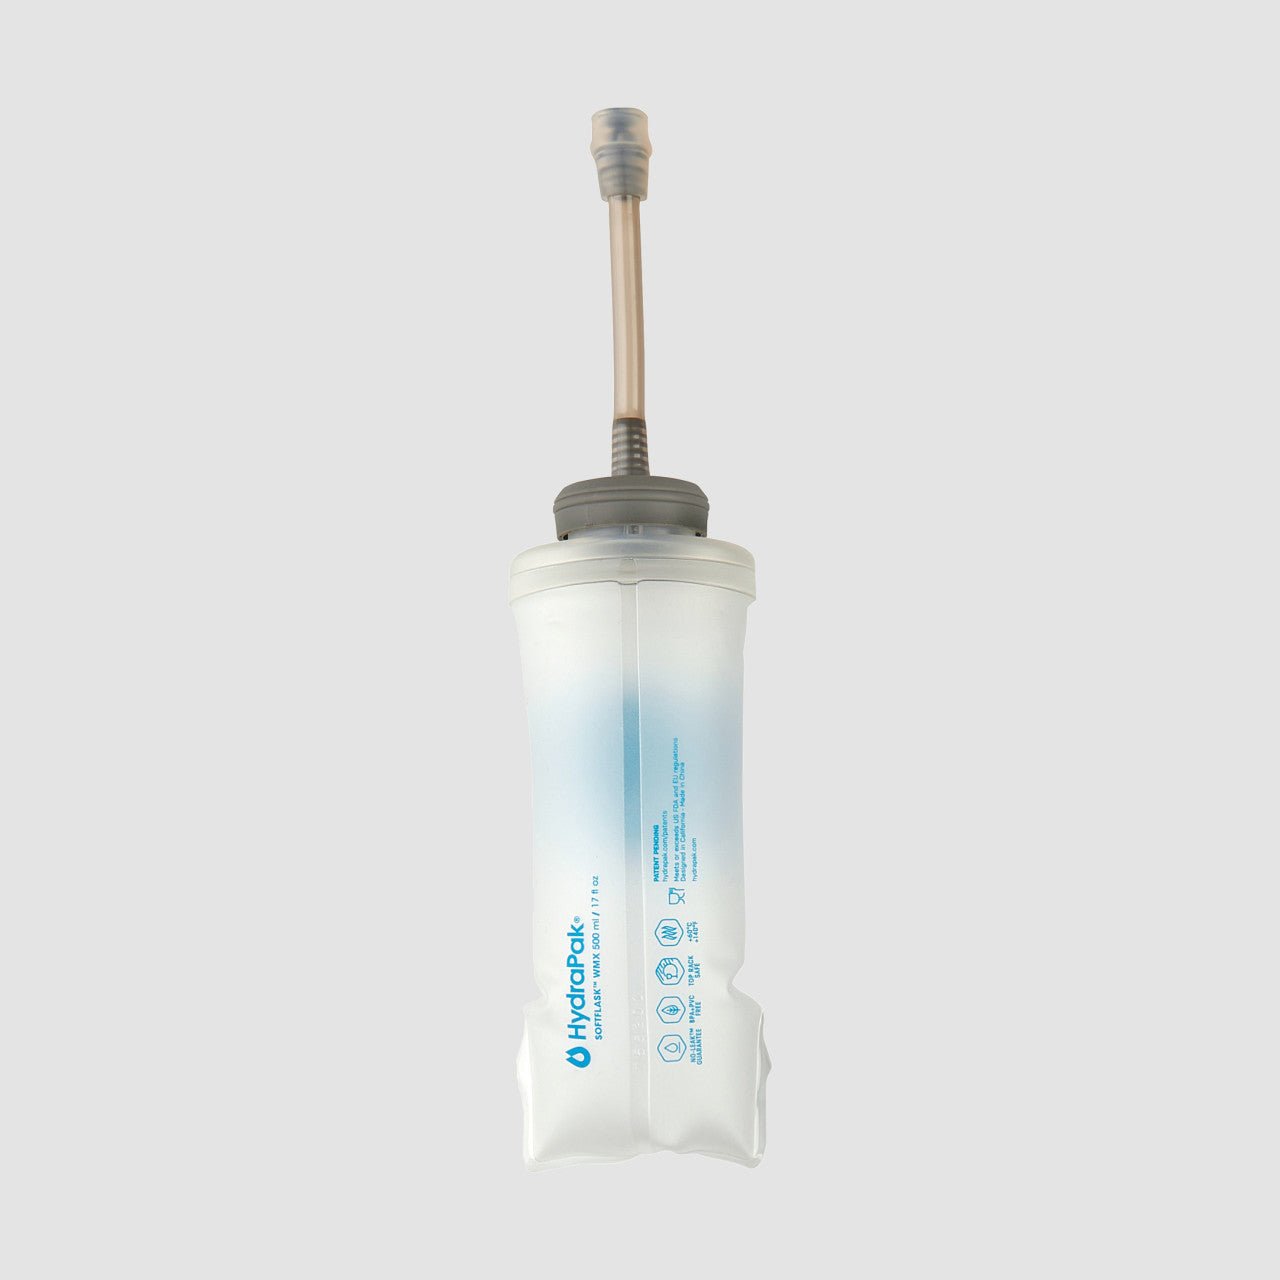 Ultimate Direction Body Bottle 500ml w straw - Soft Flask - Trek, Trail & Fish NZ